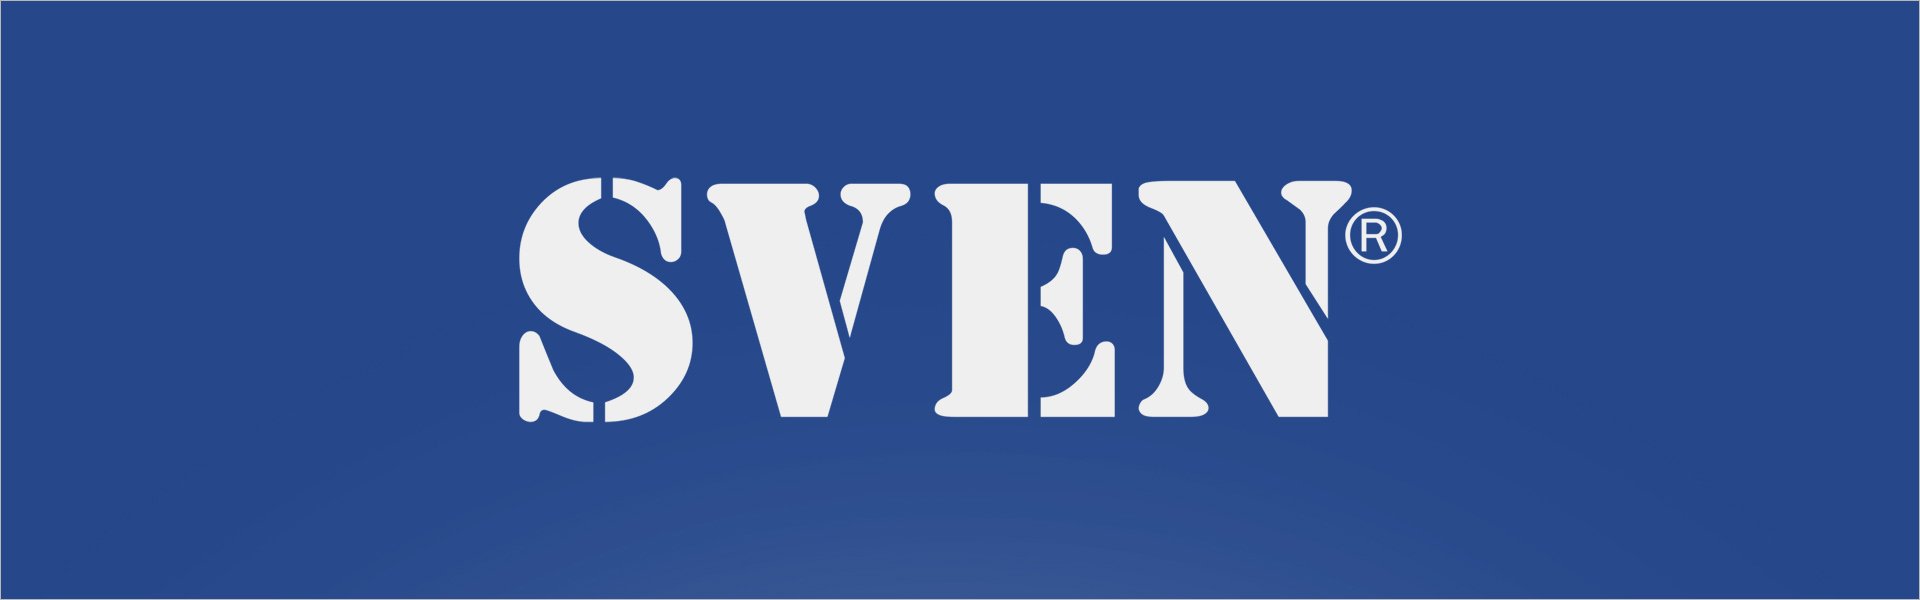 Sven PS-425 Sven